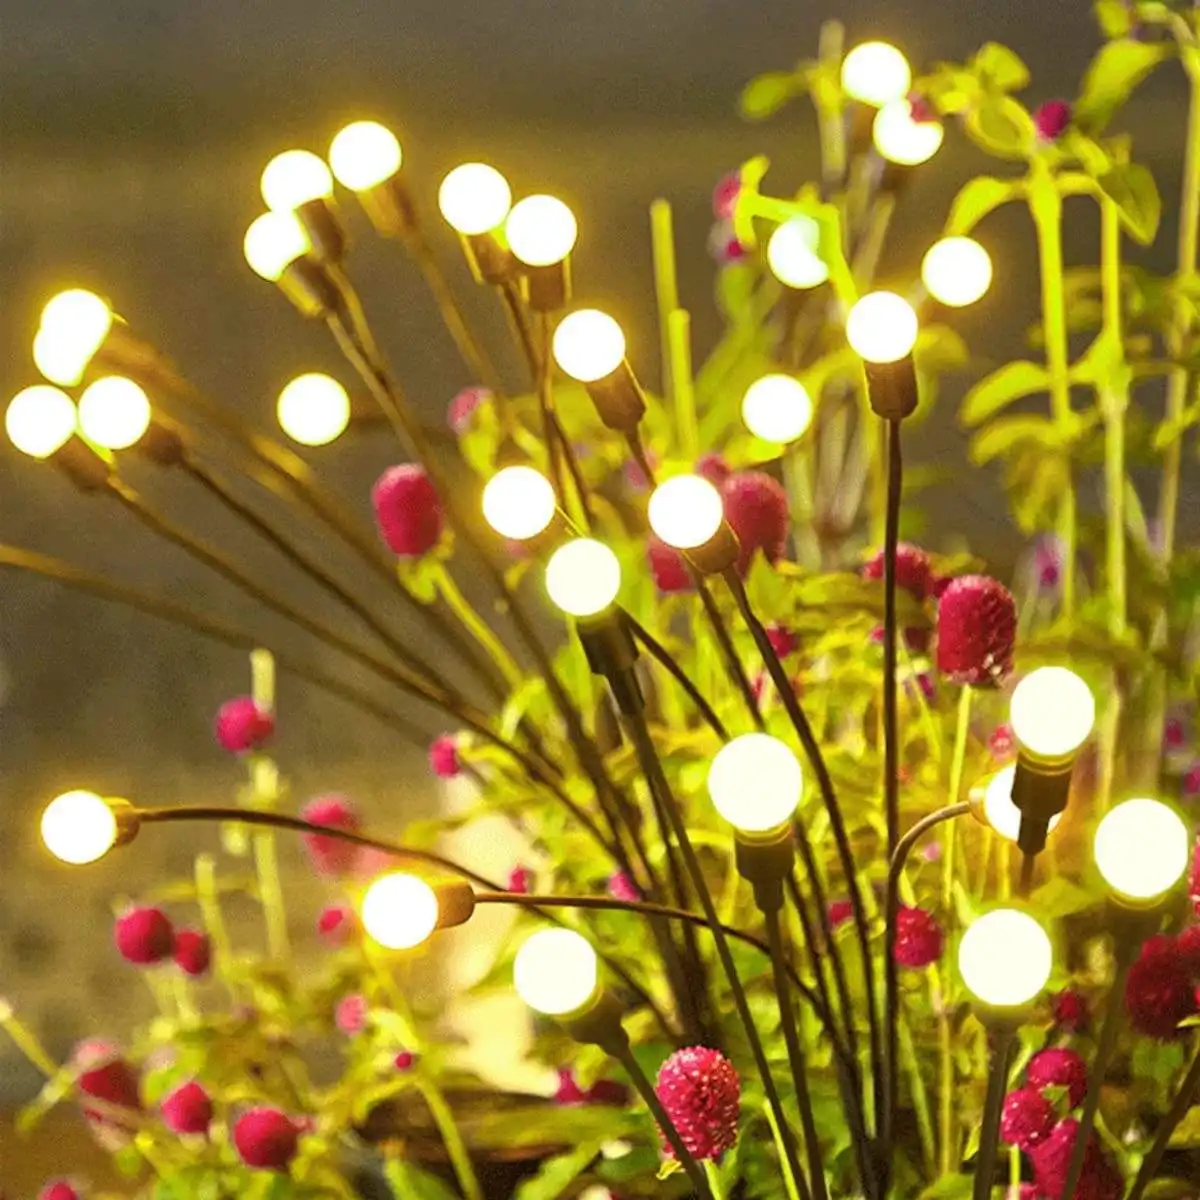 Lampu setrip LED tenaga surya, lampu tali peri LED untuk pesta Natal, dekorasi pernikahan, lampu karangan bunga, baterai Lithium tahan air rumah luar ruangan